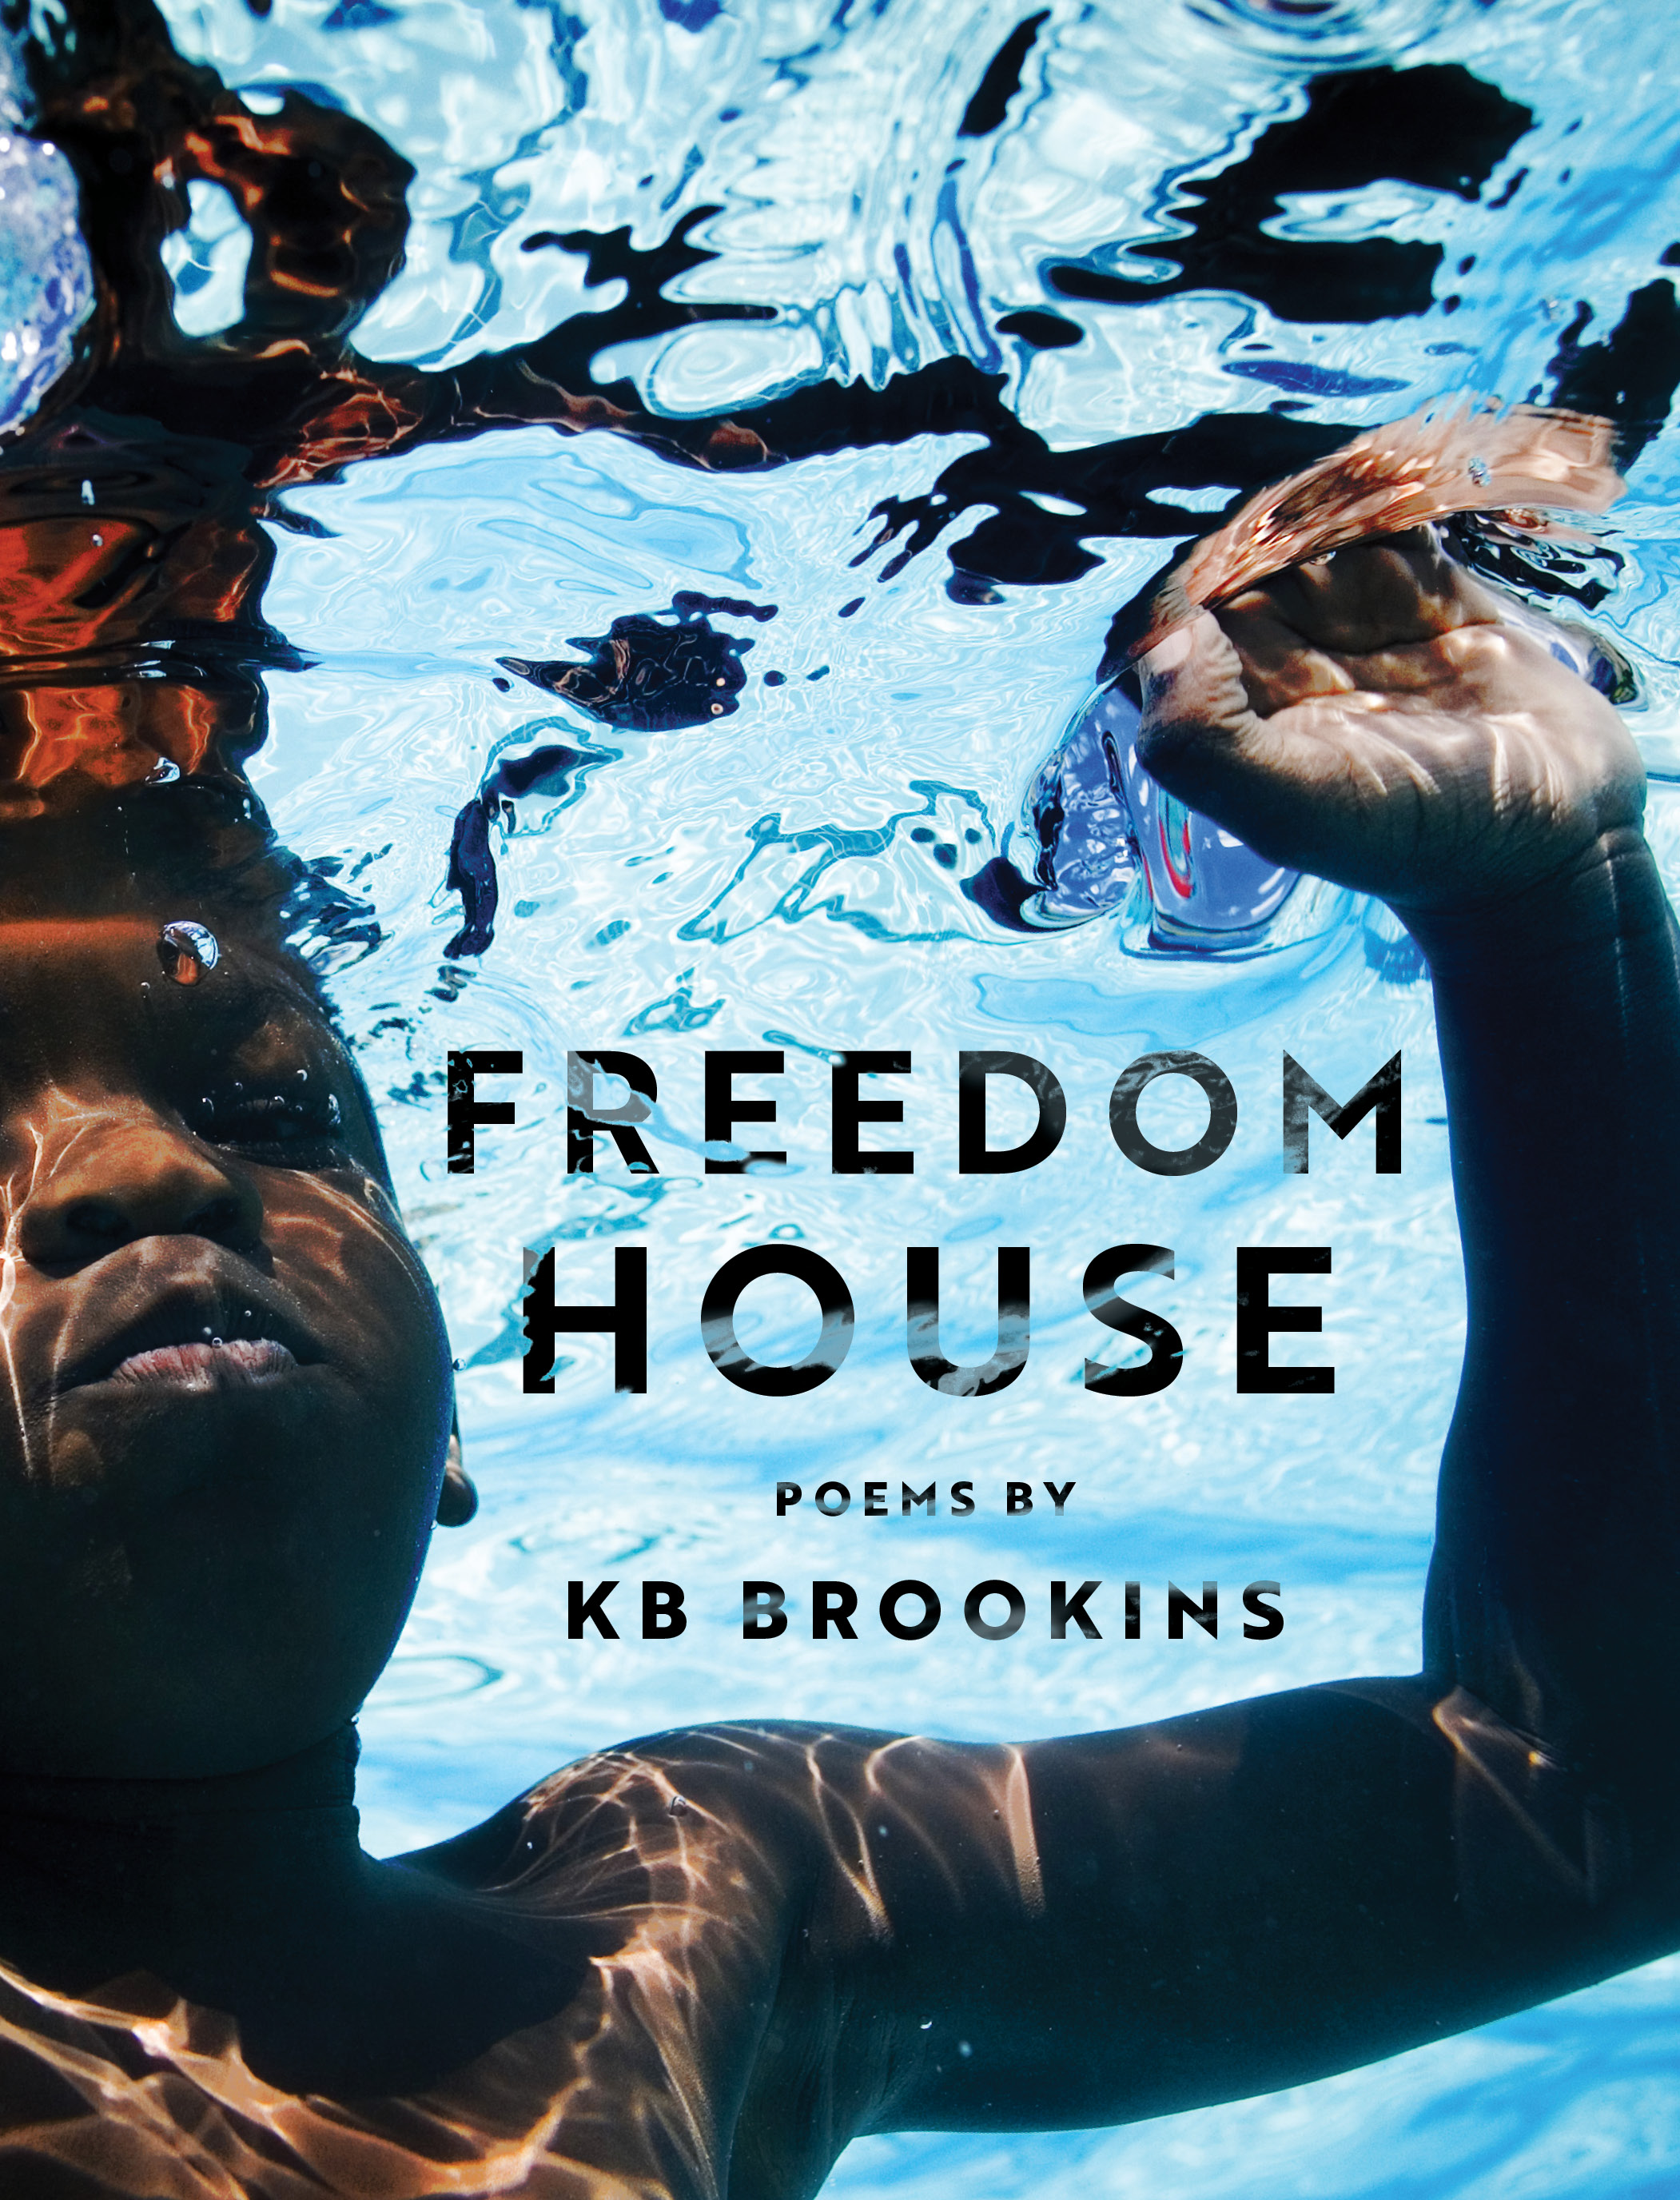 KB 브루킨스의 시집 <프리덤 하우스>의 표지 /사진제공=KB Brookins